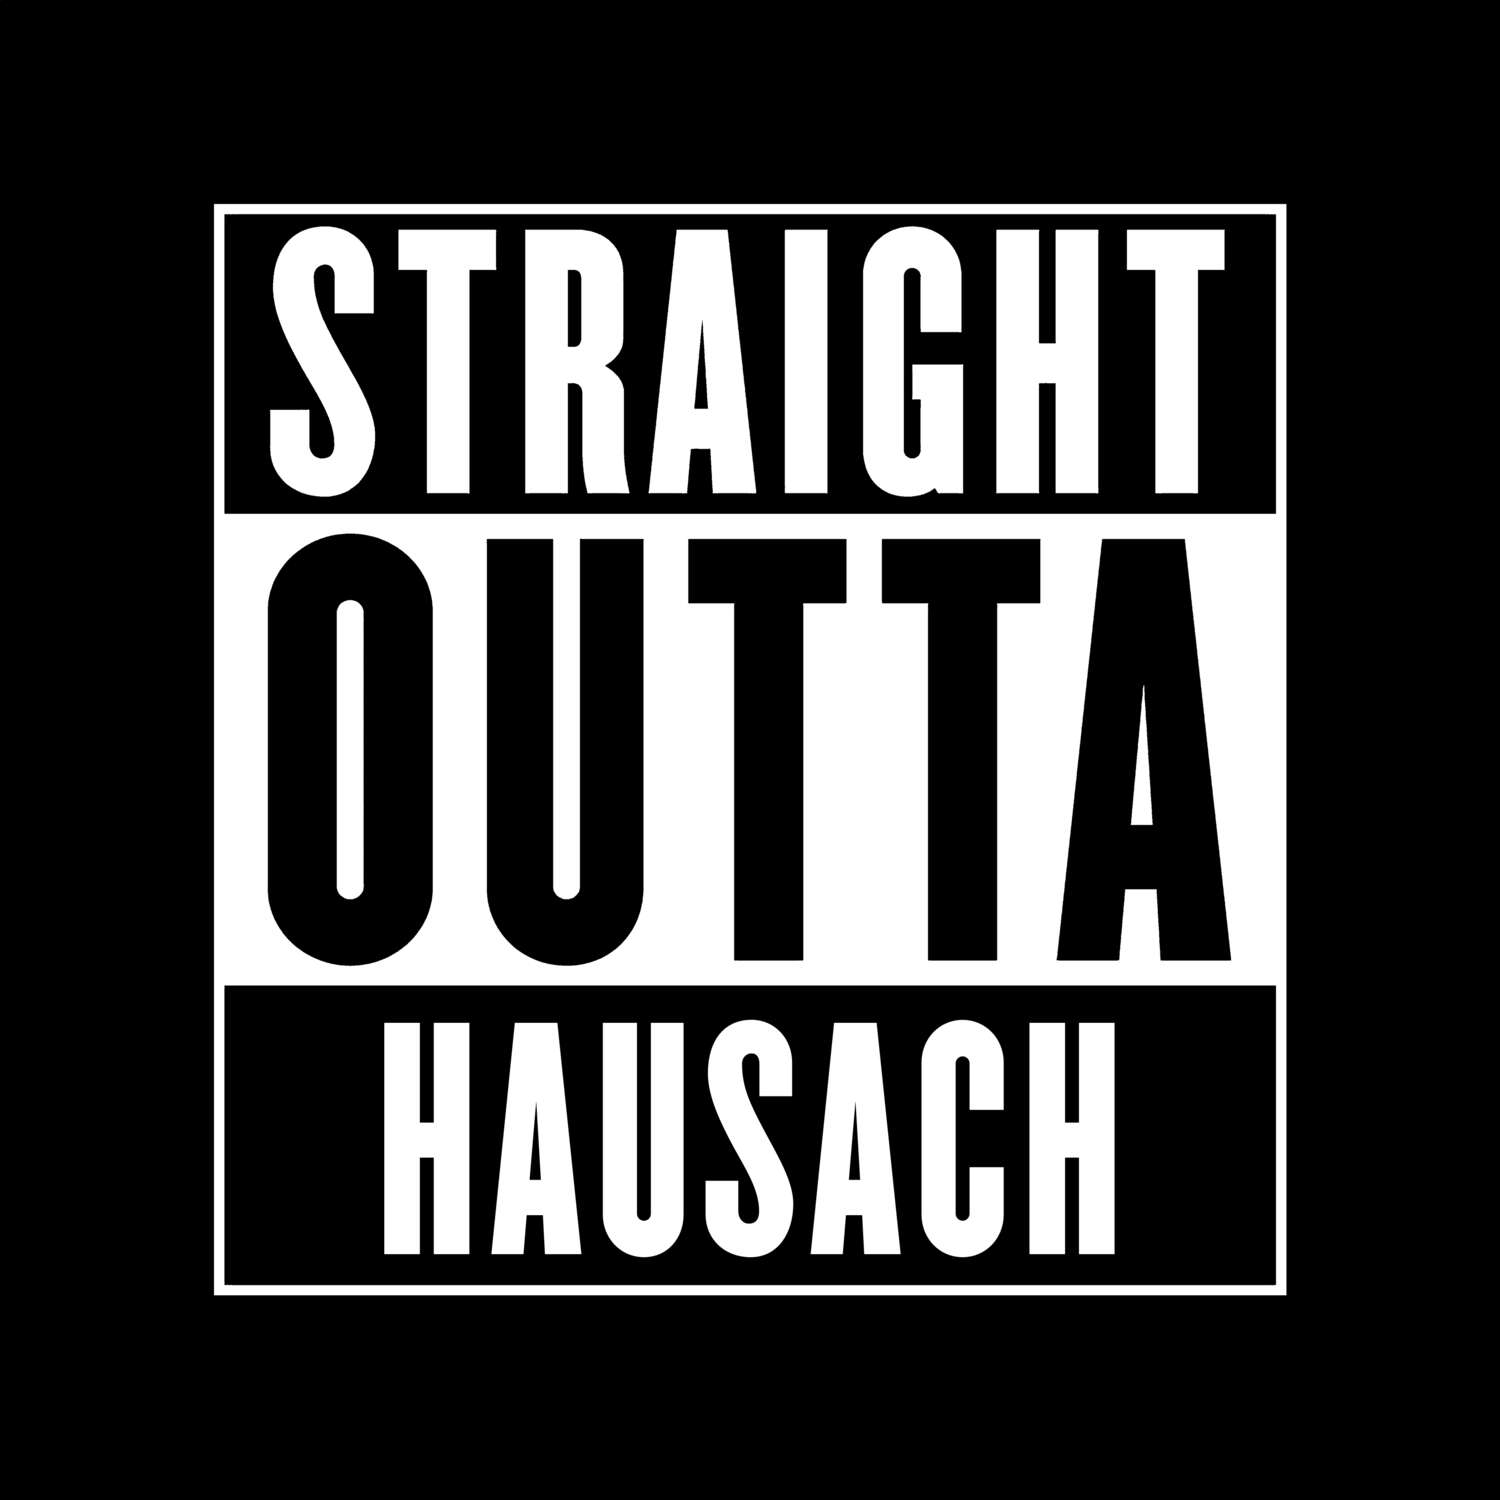 Hausach T-Shirt »Straight Outta«